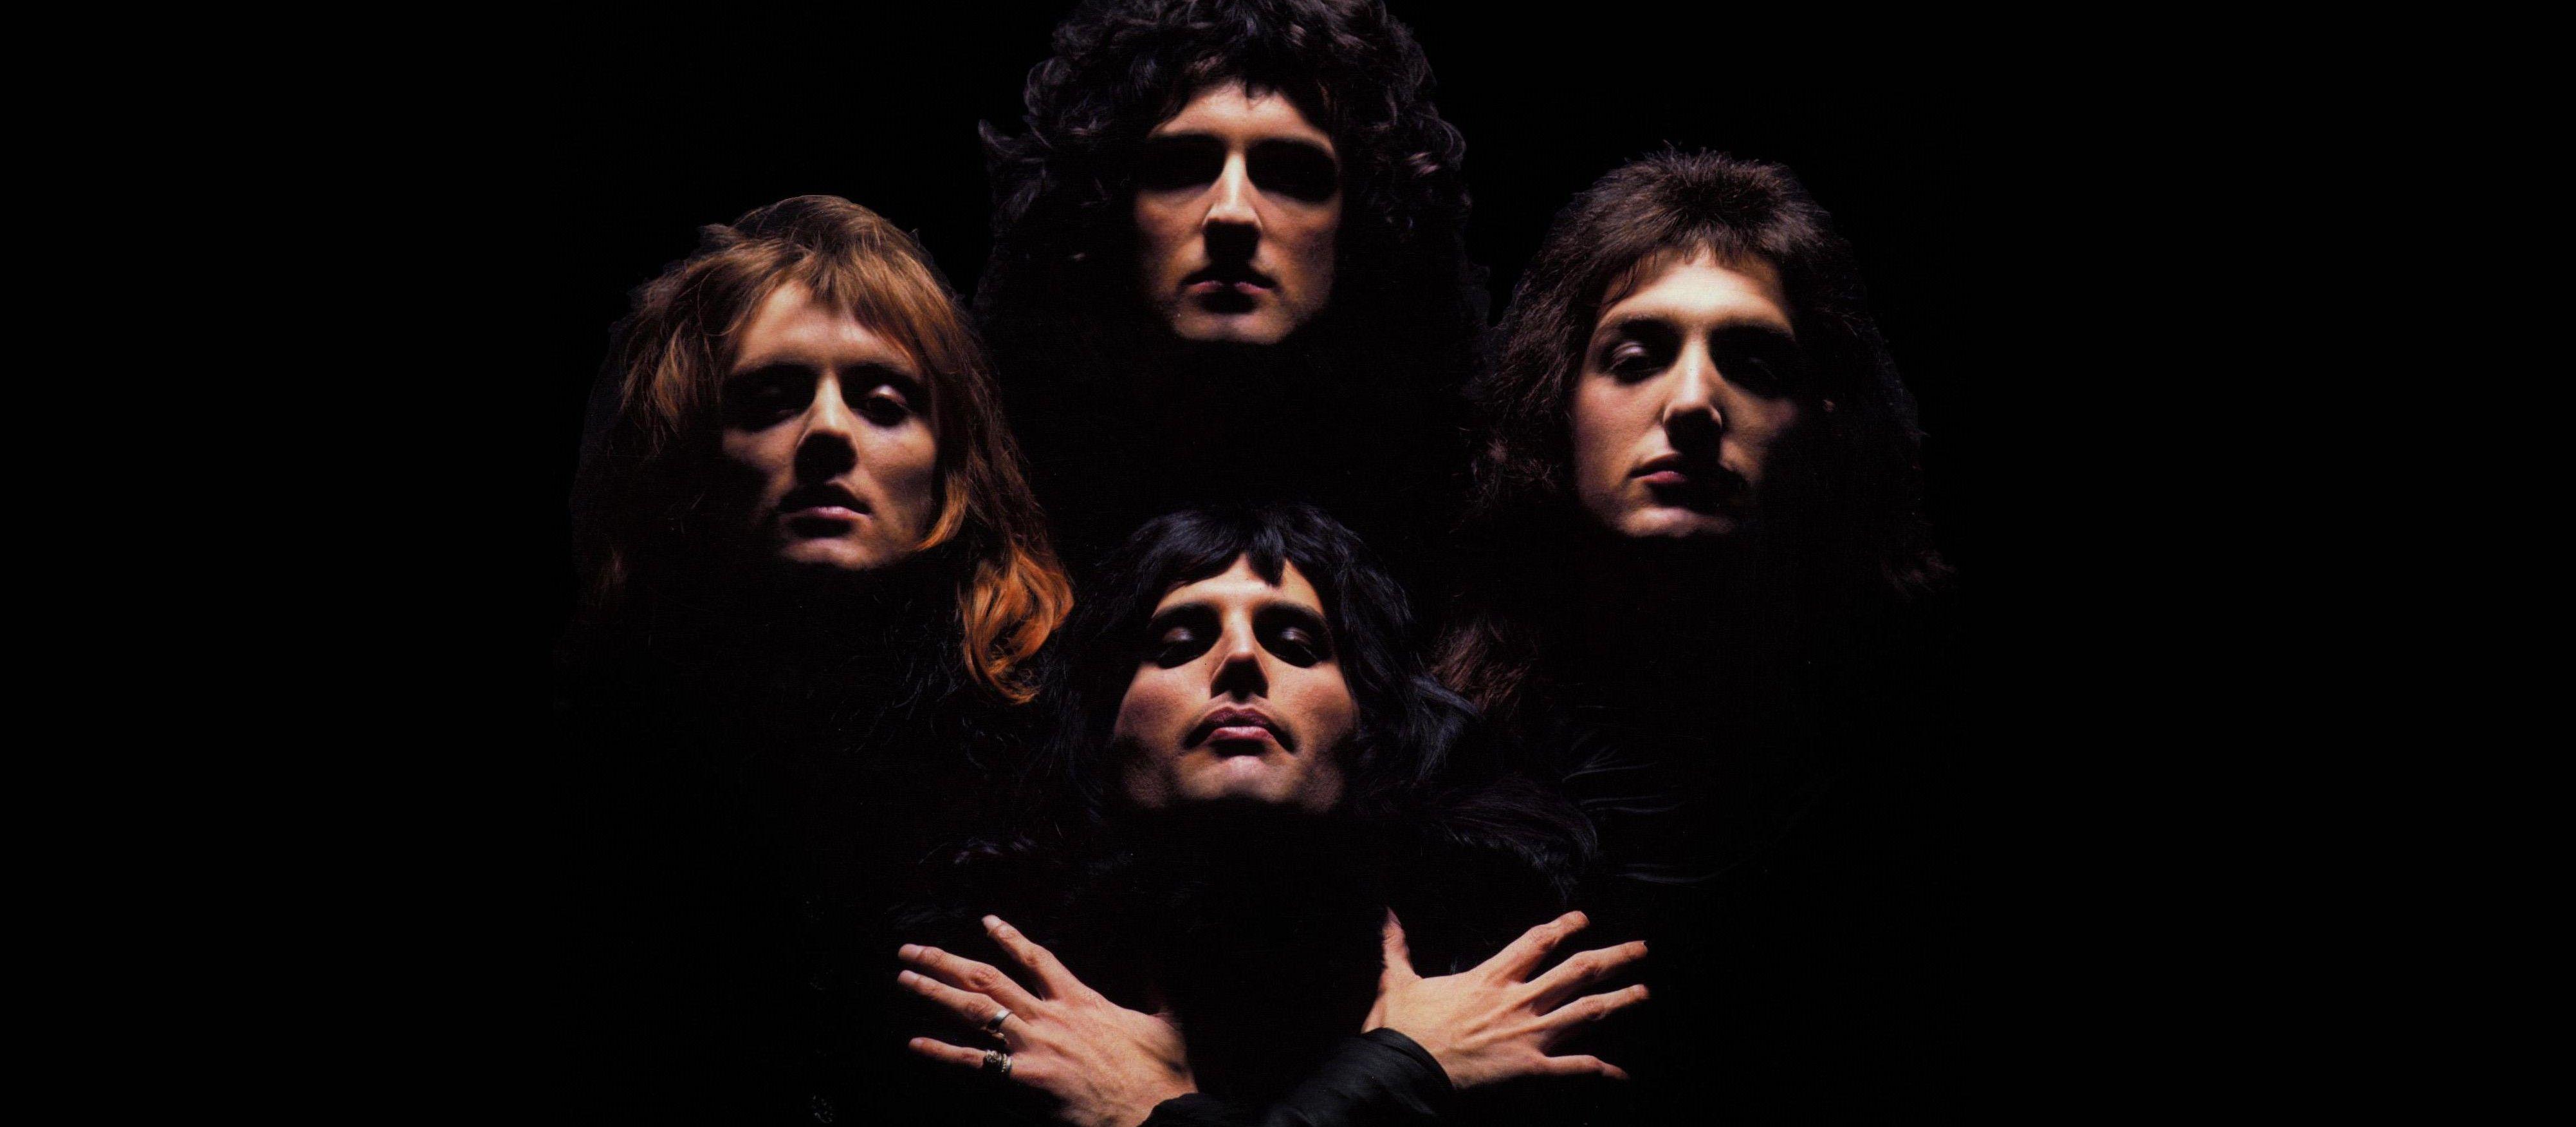 for iphone download Bohemian Rhapsody